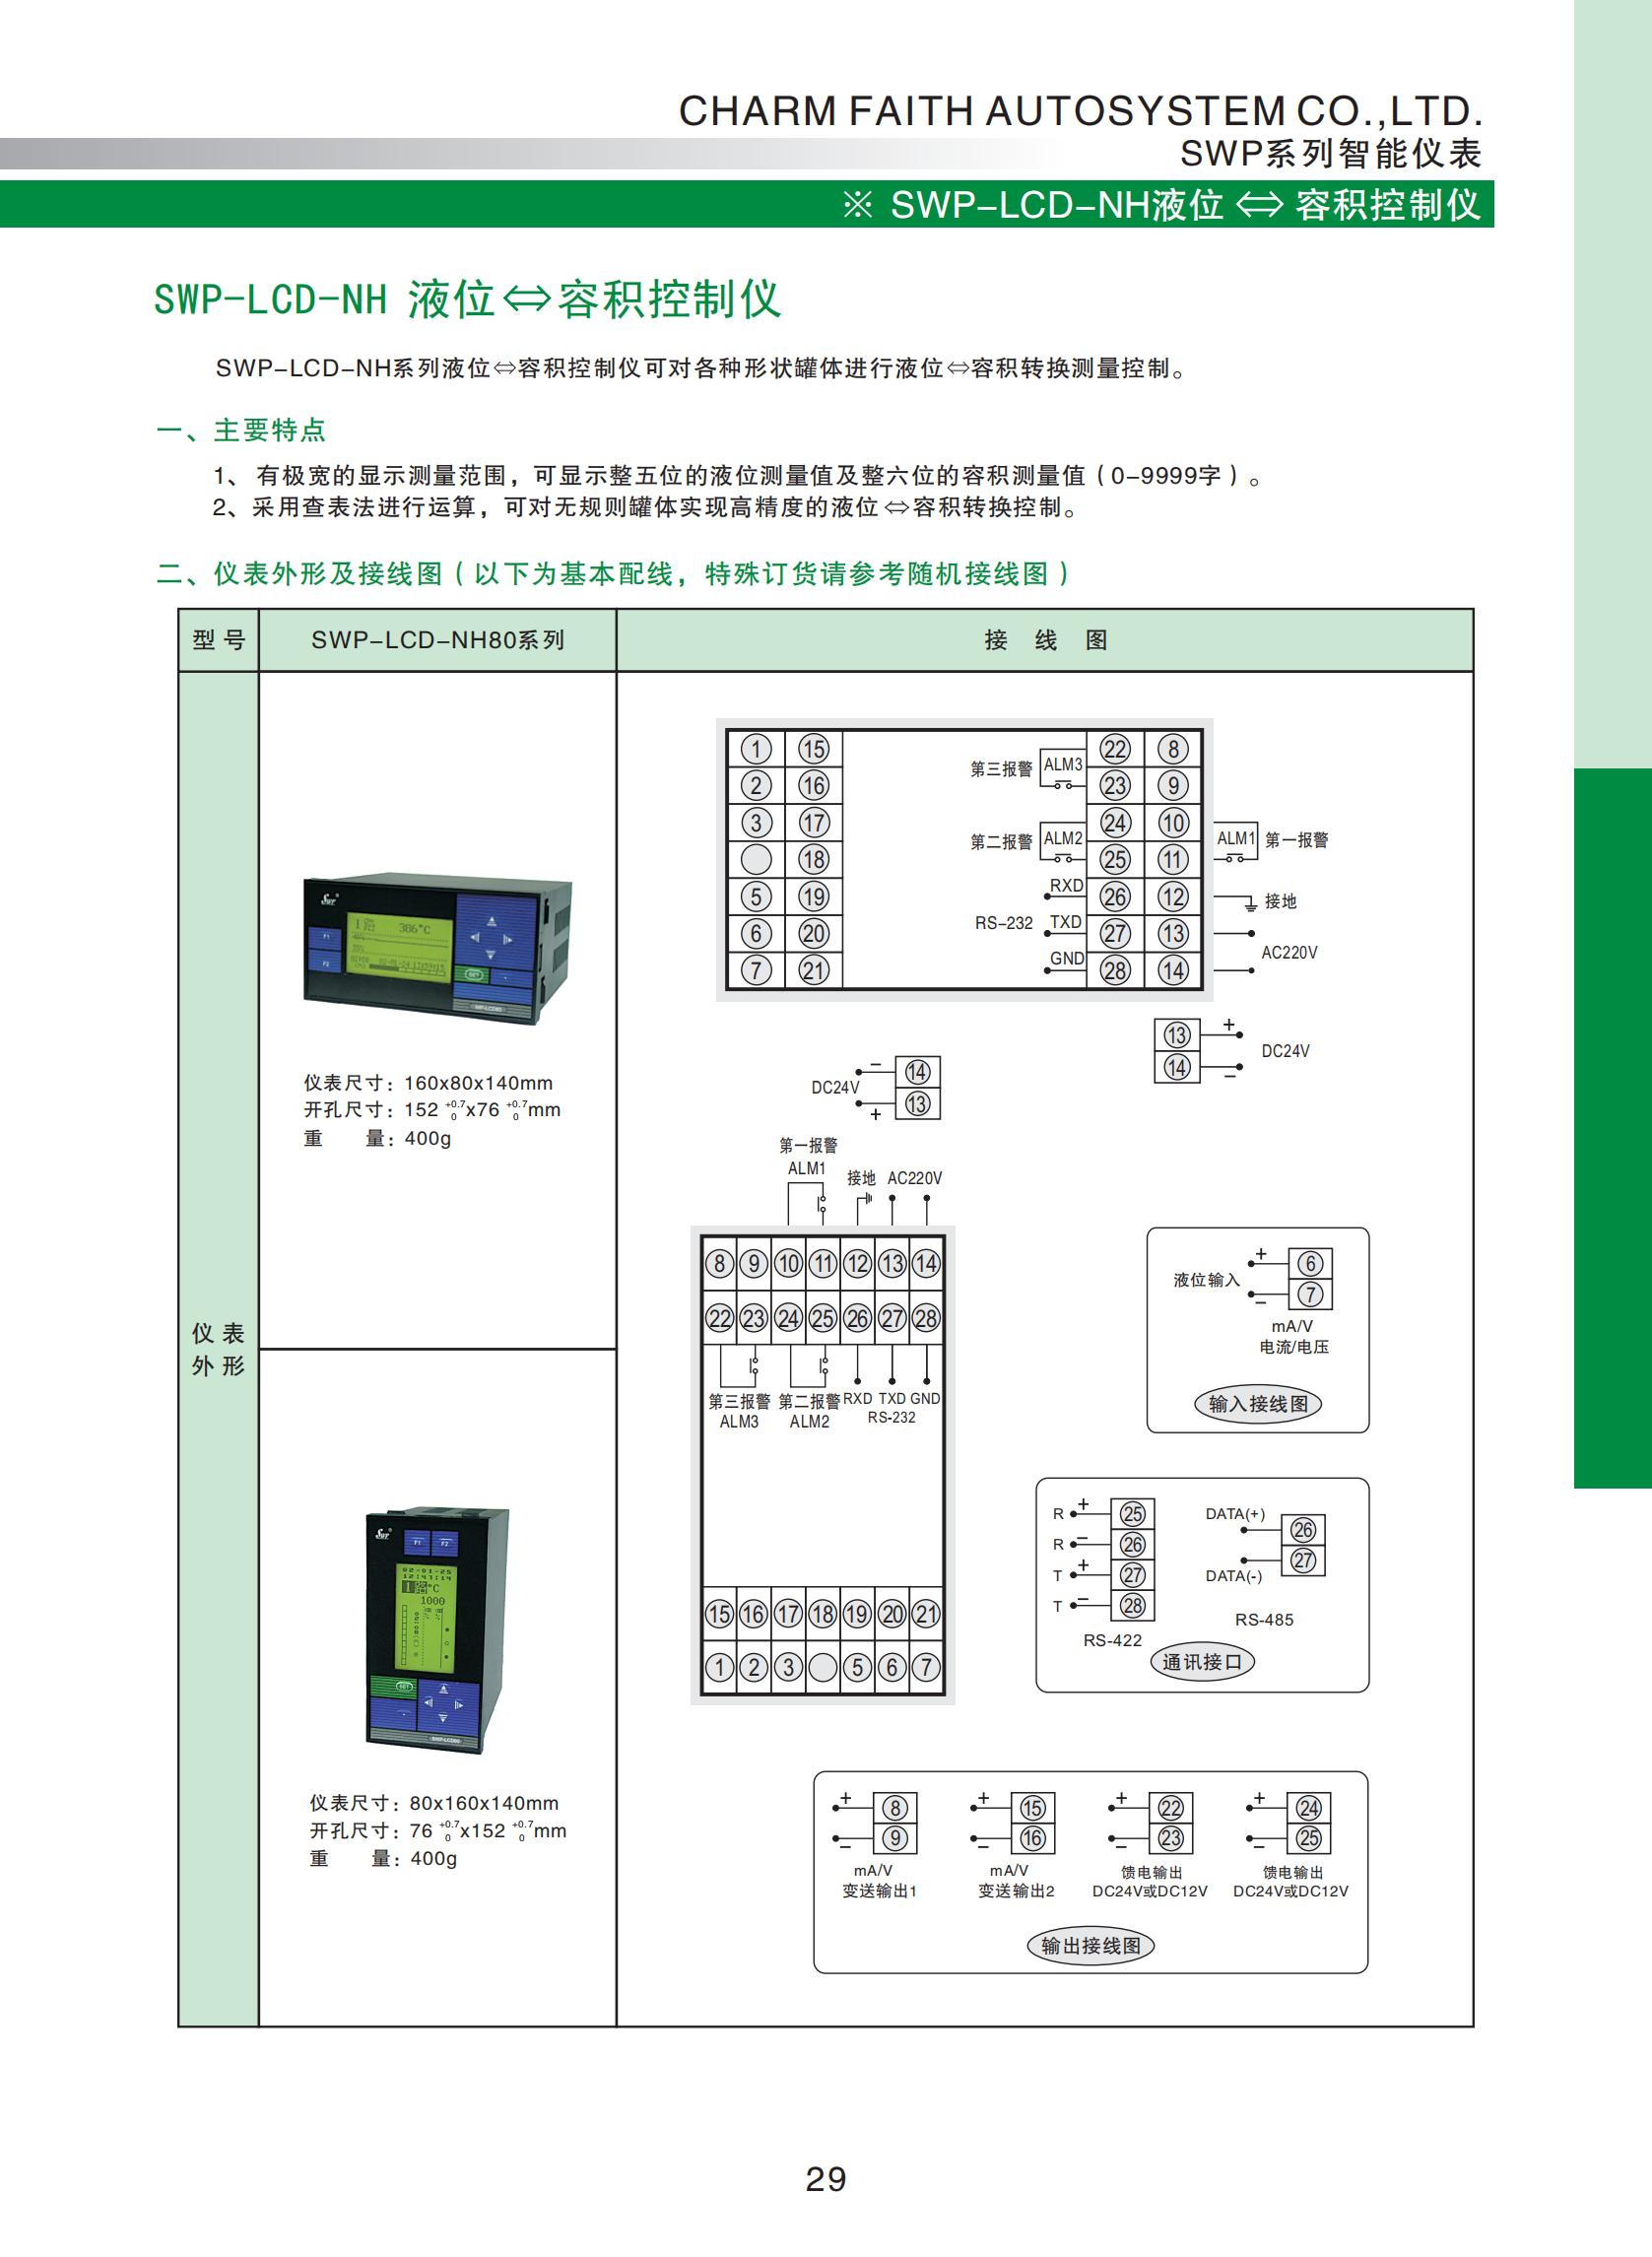 SWP-LCD-NH液位-容积控制仪_00.jpg